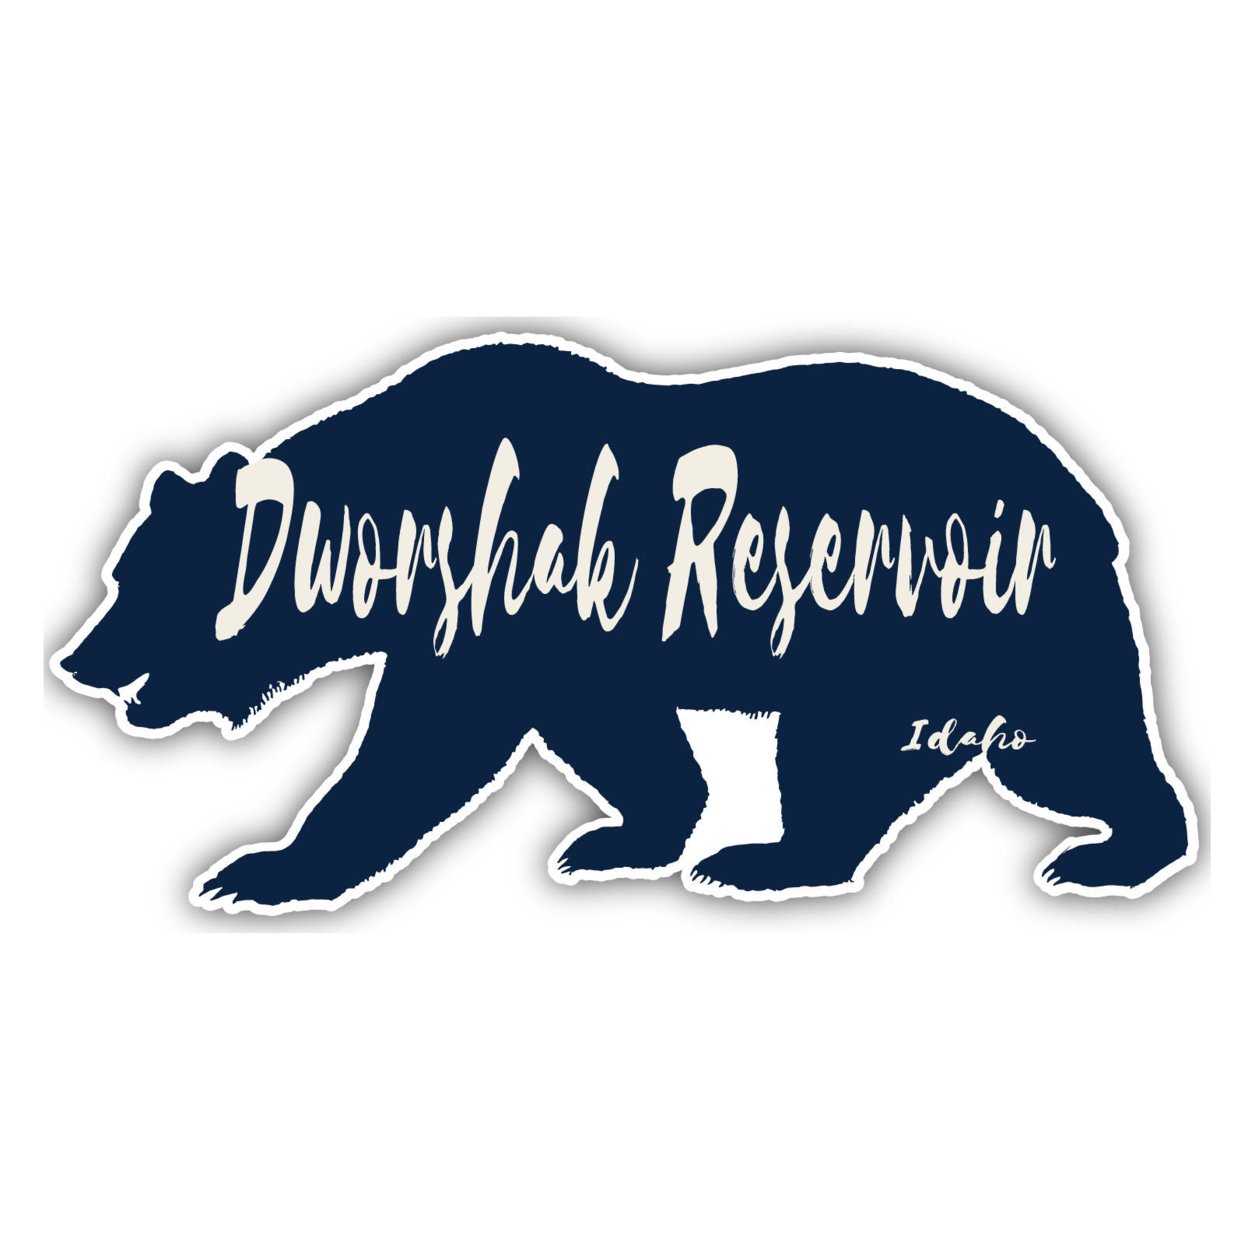 Dworshak Reservoir Idaho Souvenir Decorative Stickers (Choose Theme And Size) - Single Unit, 6-Inch, Tent